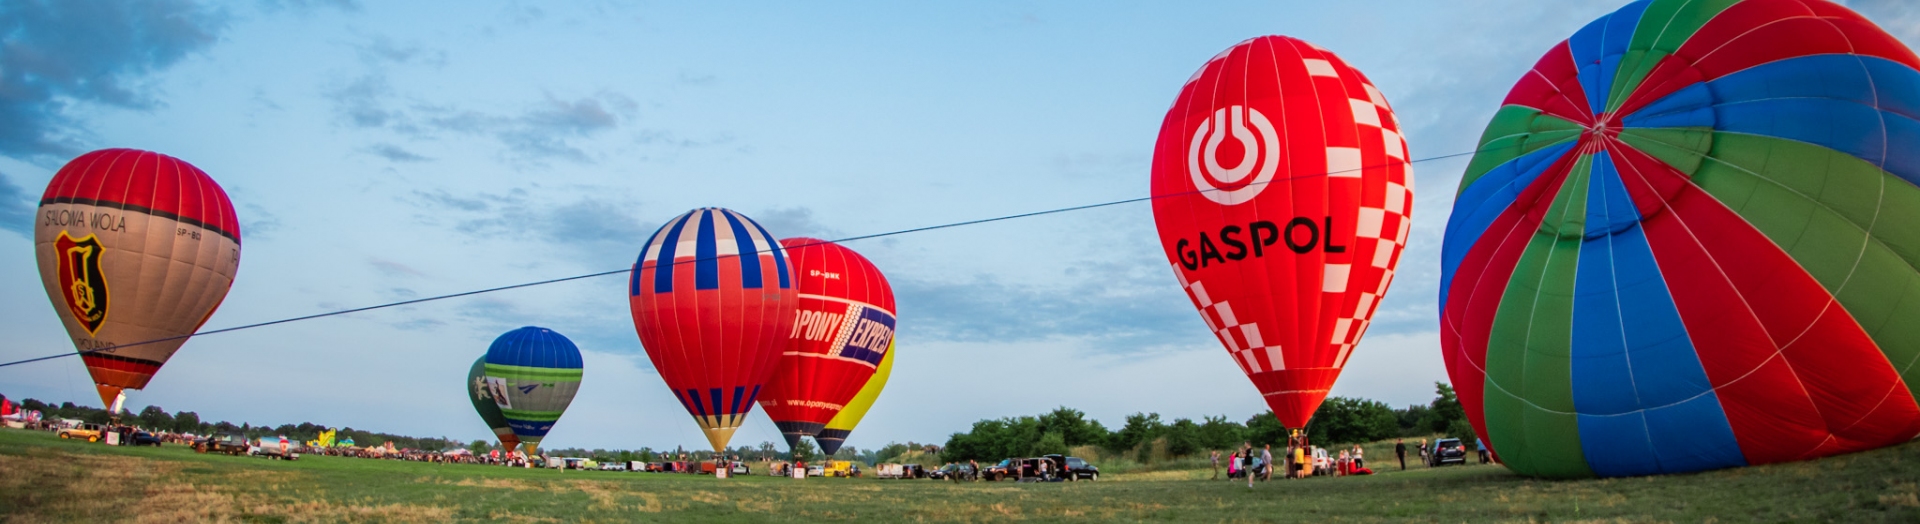 The 5th Regional Balloon Fiesta